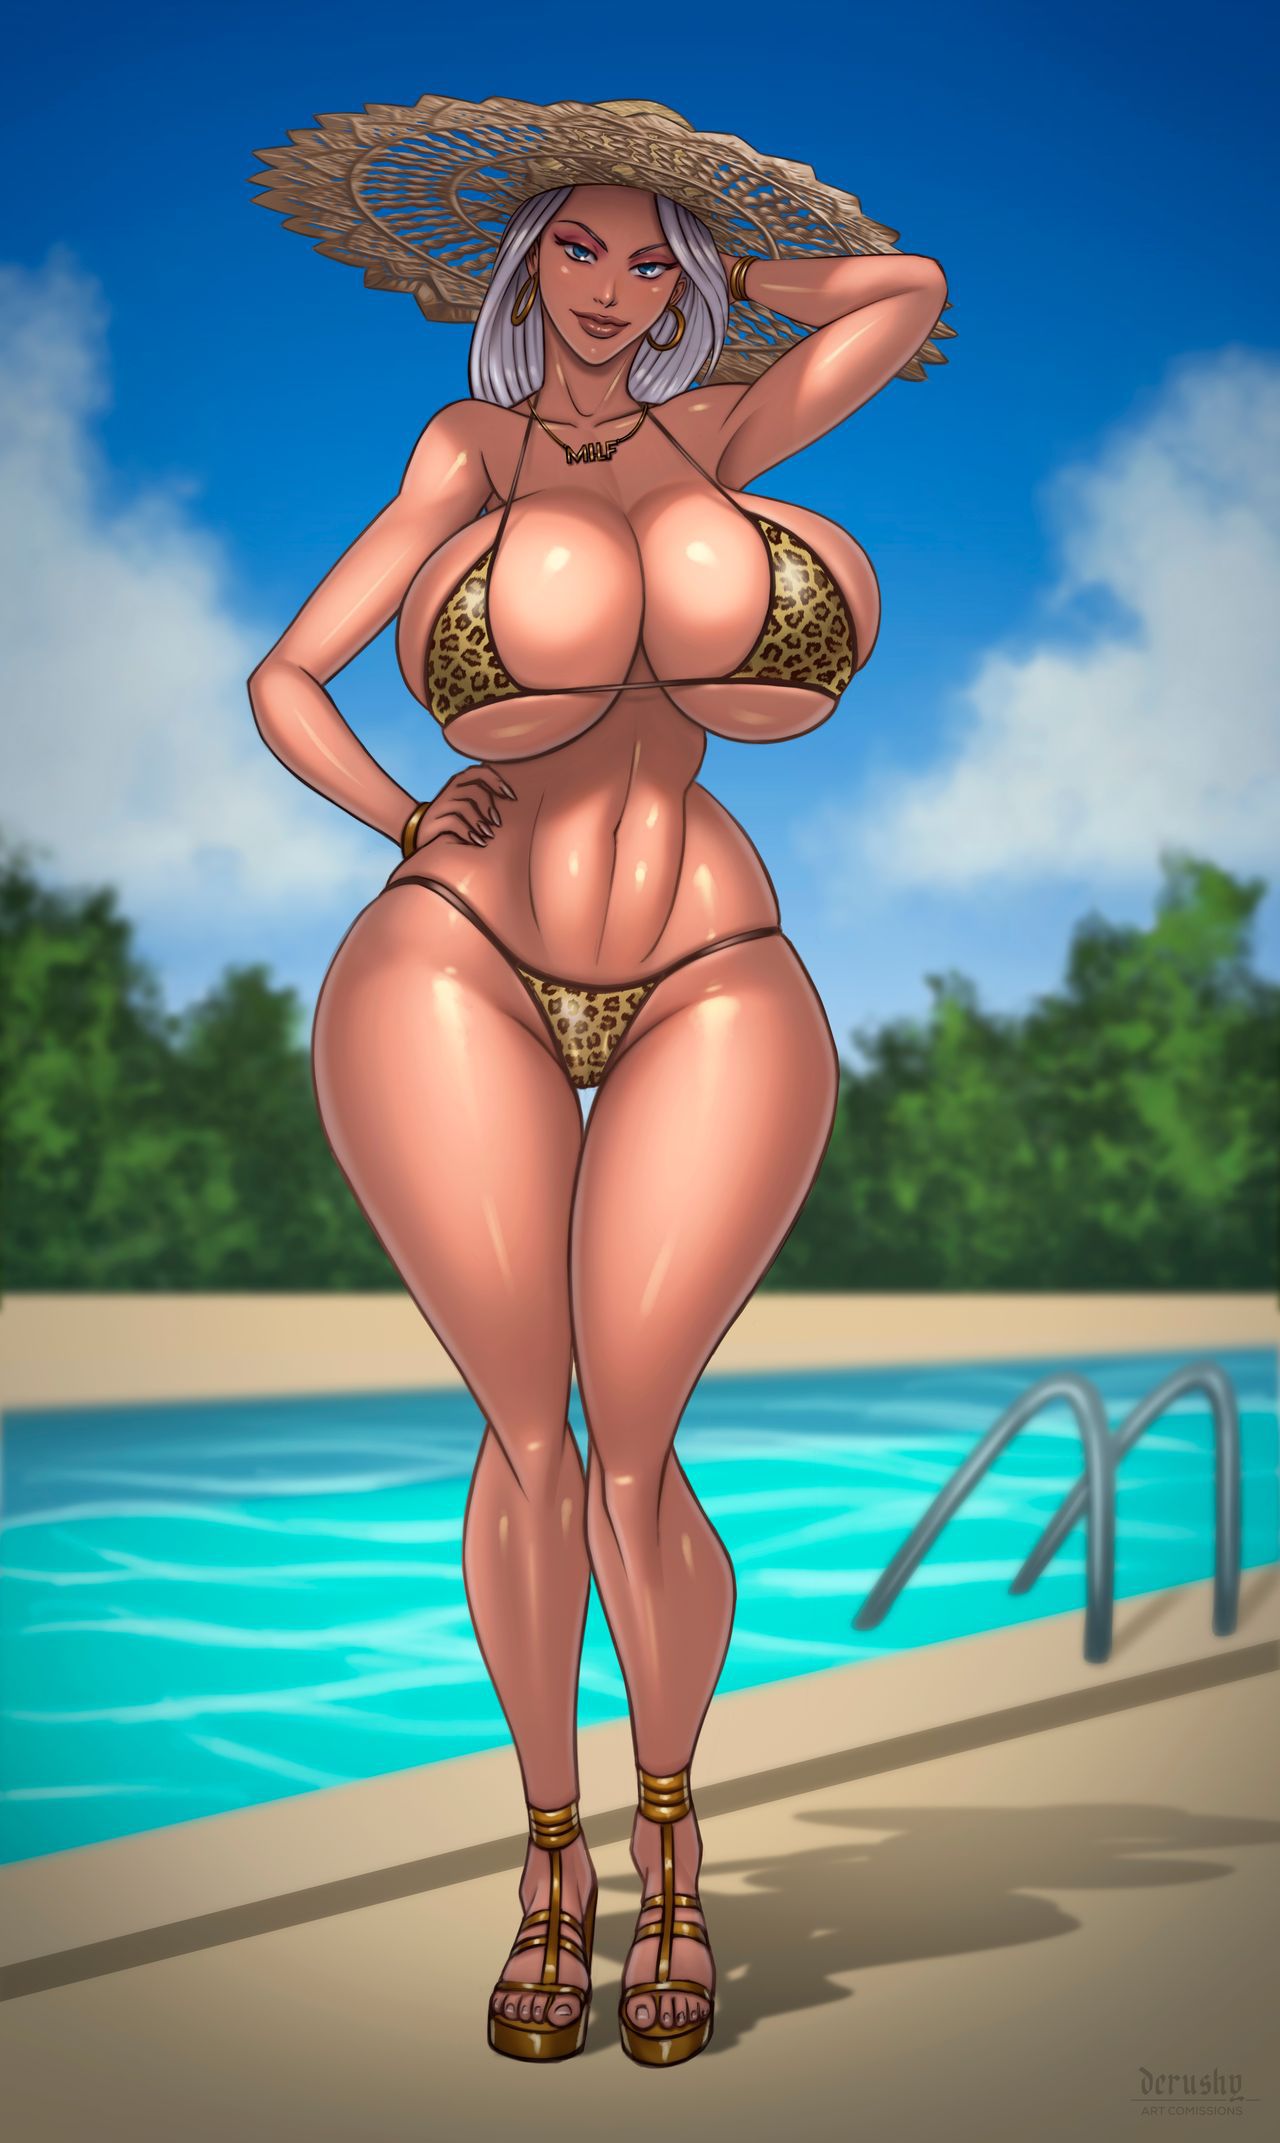 [Derushy] Silvone Du Bois - Bikinigirl 2